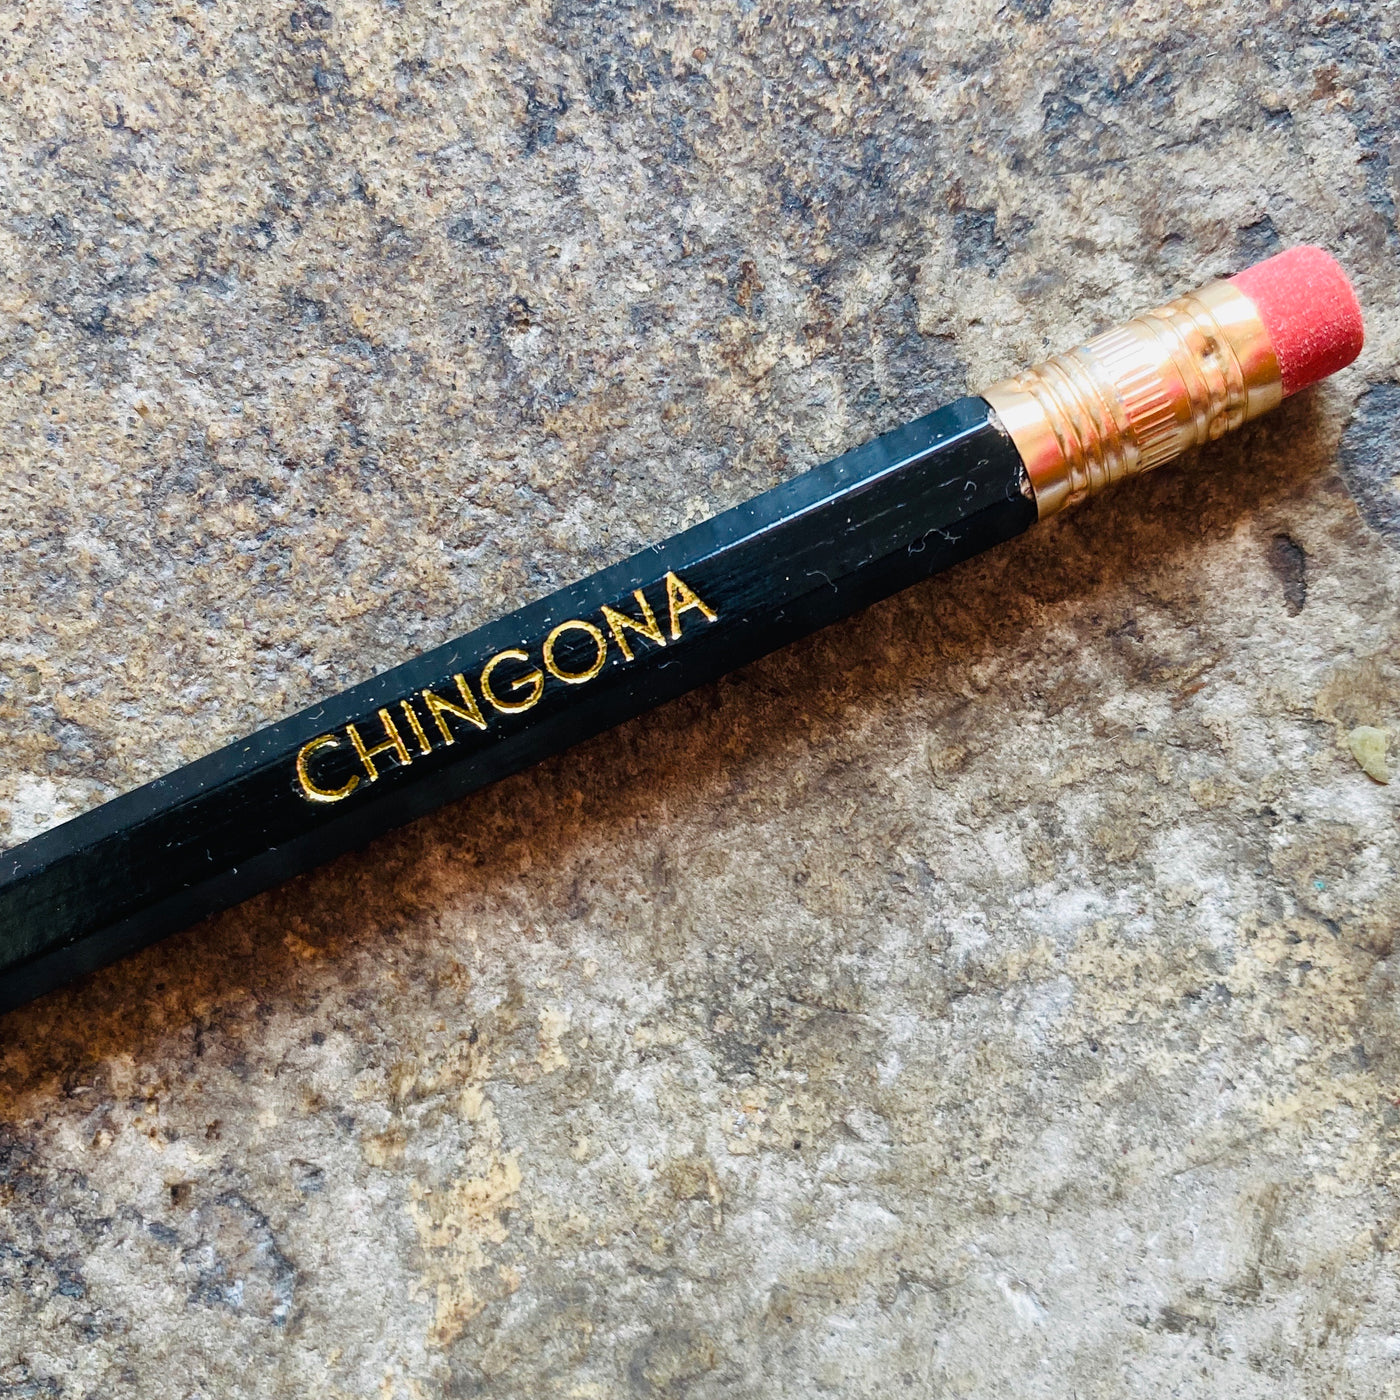 Black Chingona phrase pencil.